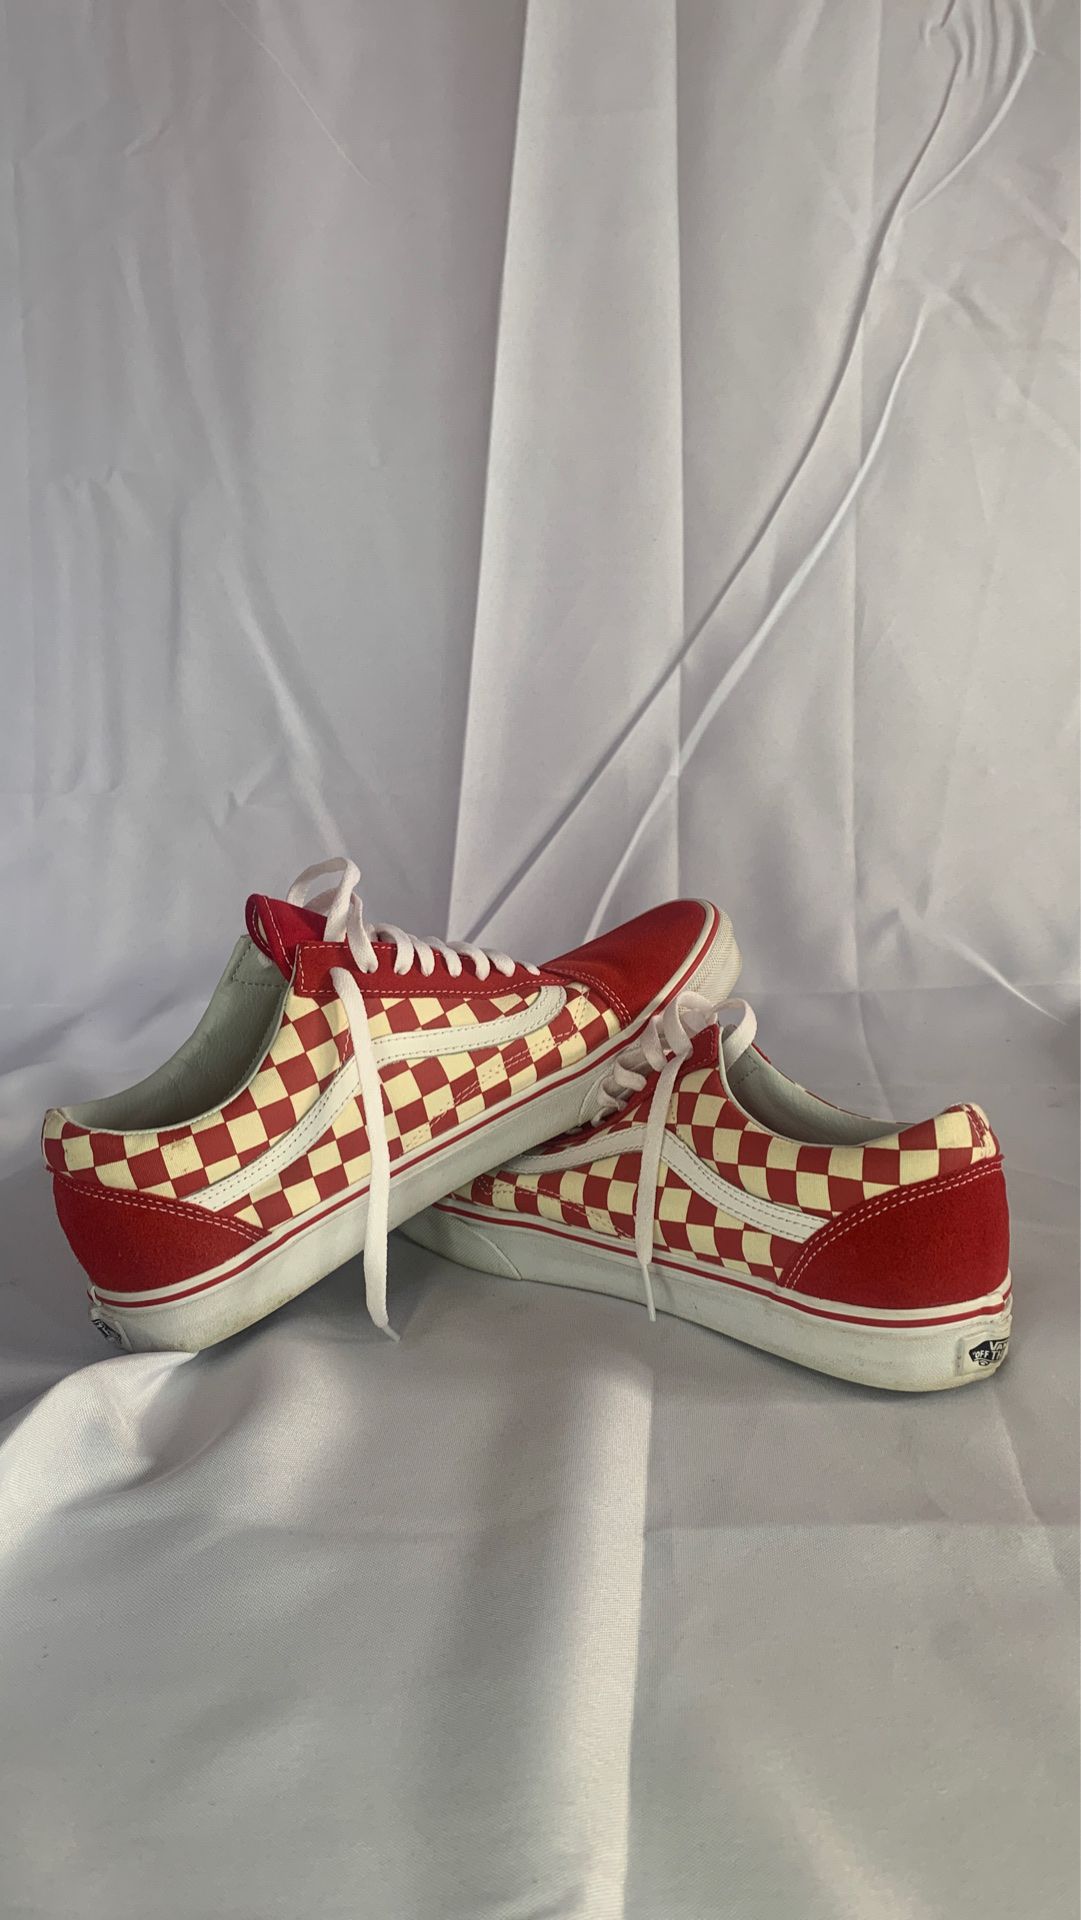 Vans Old Skool Low “Red Checker” - Size 11.5